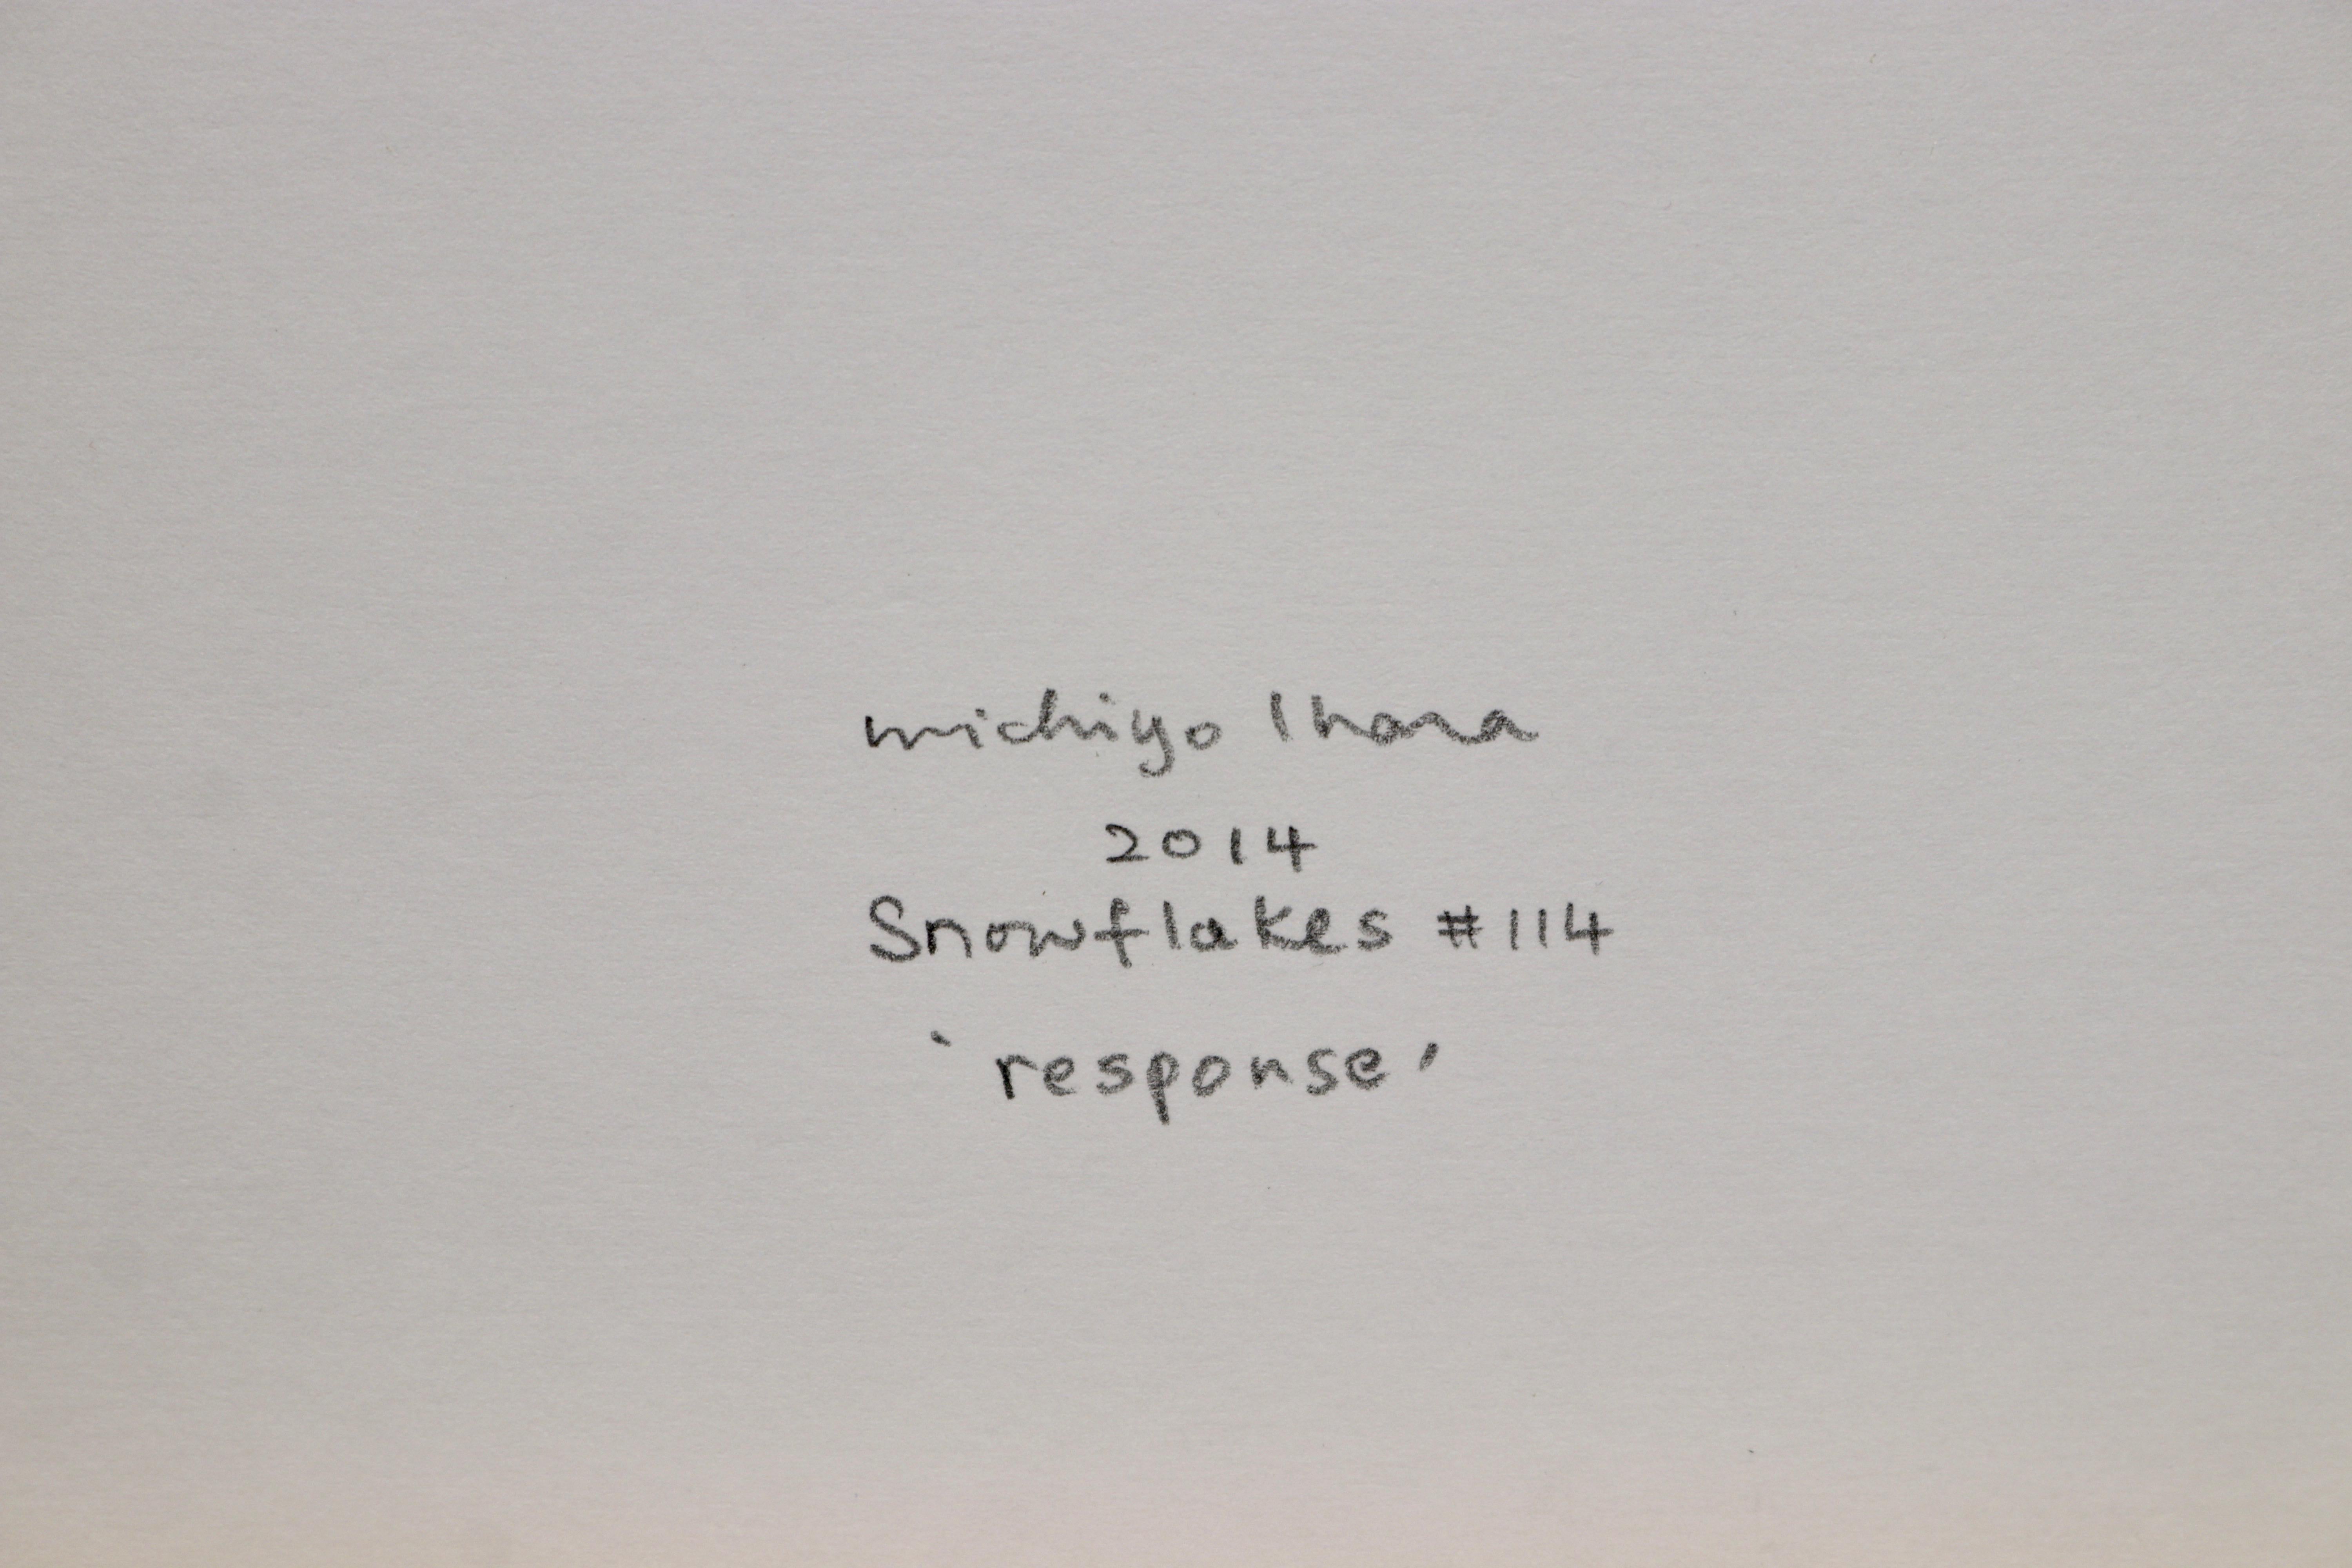 Snowflakes 114 Response, Mandala Pencil Drawing, Desert Landscape, Moon, Pattern - Contemporary Art by Michiyo Ihara